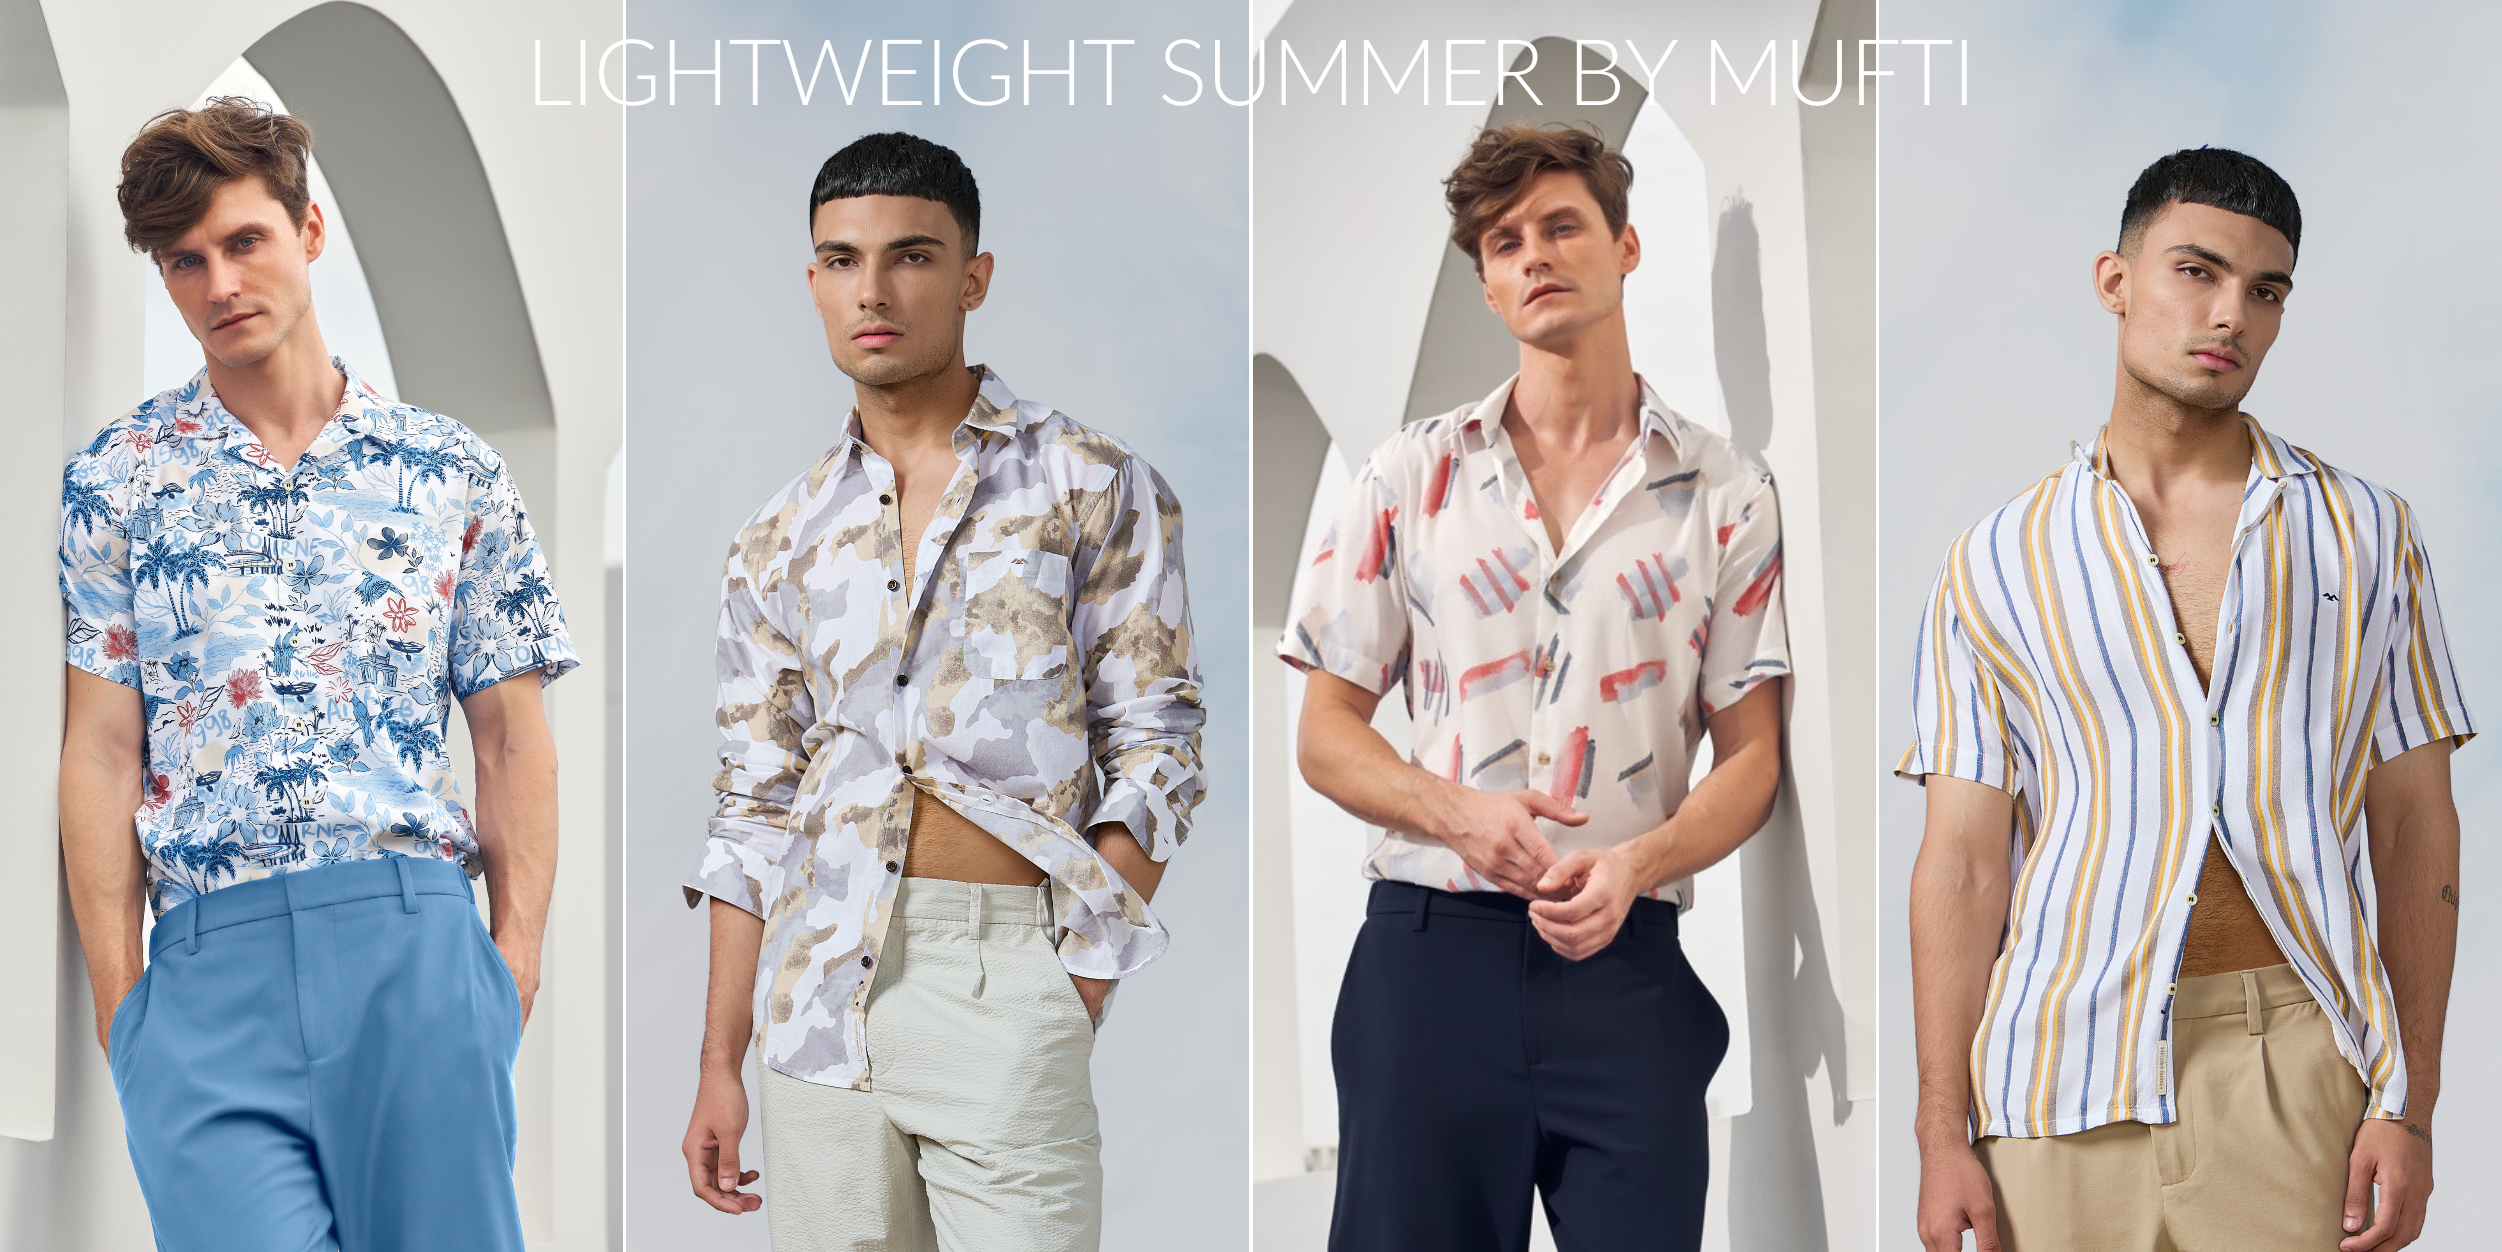 Lightweight Summer by Mufti